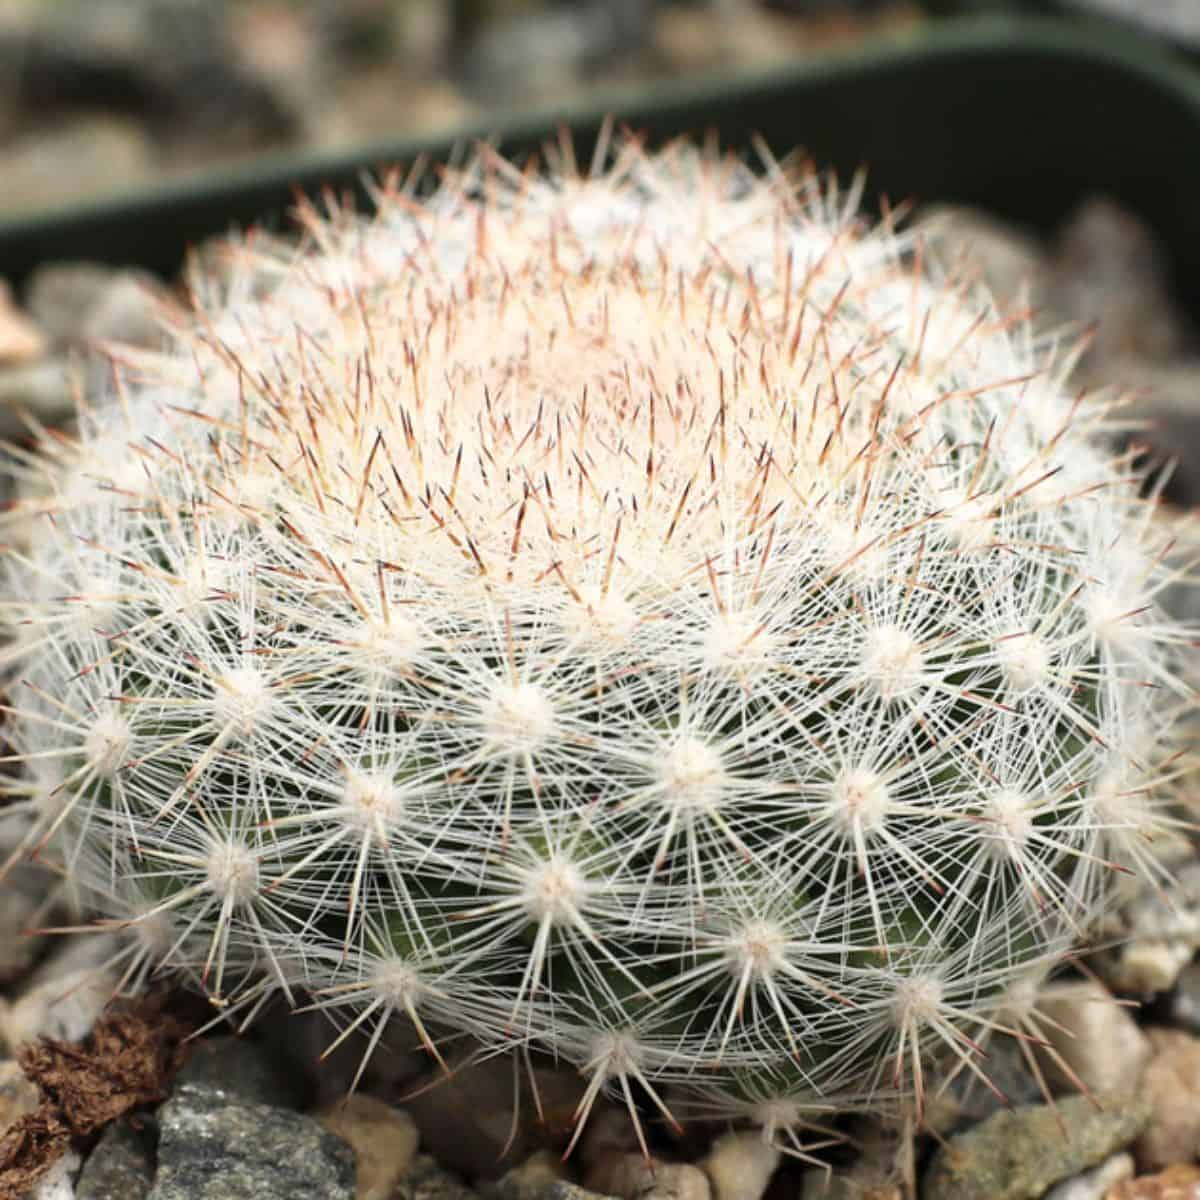 Mammilloydia candida - Snowball Cactus in a pot.